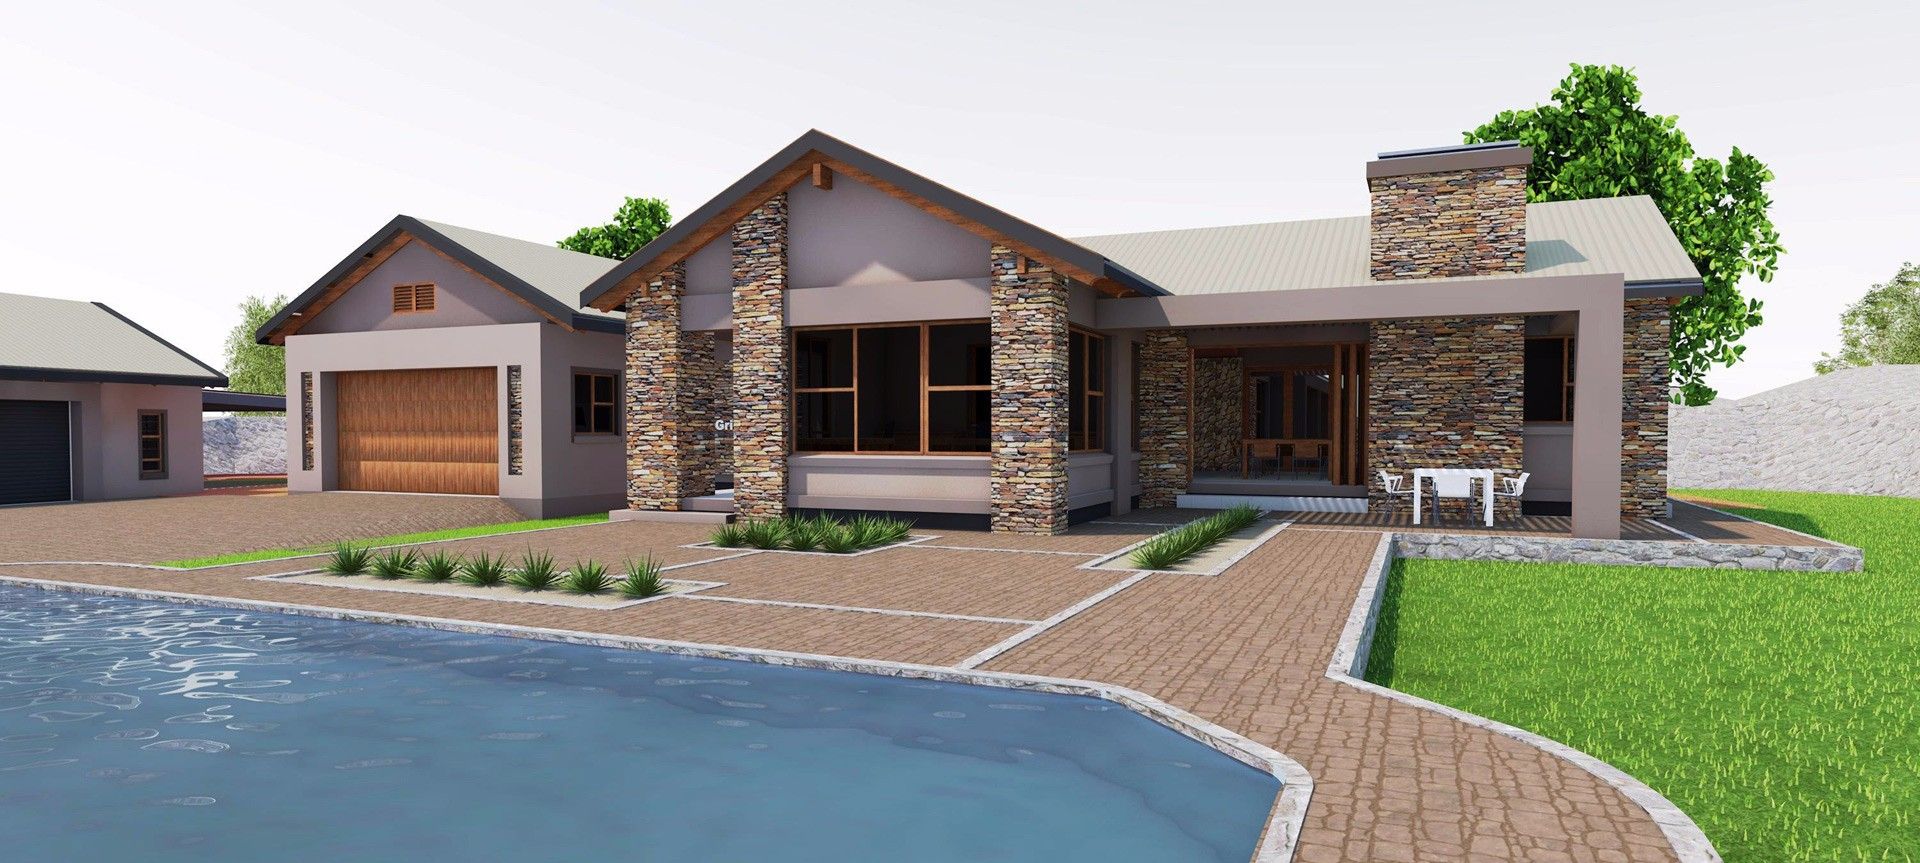 modern farm style house plans south africa